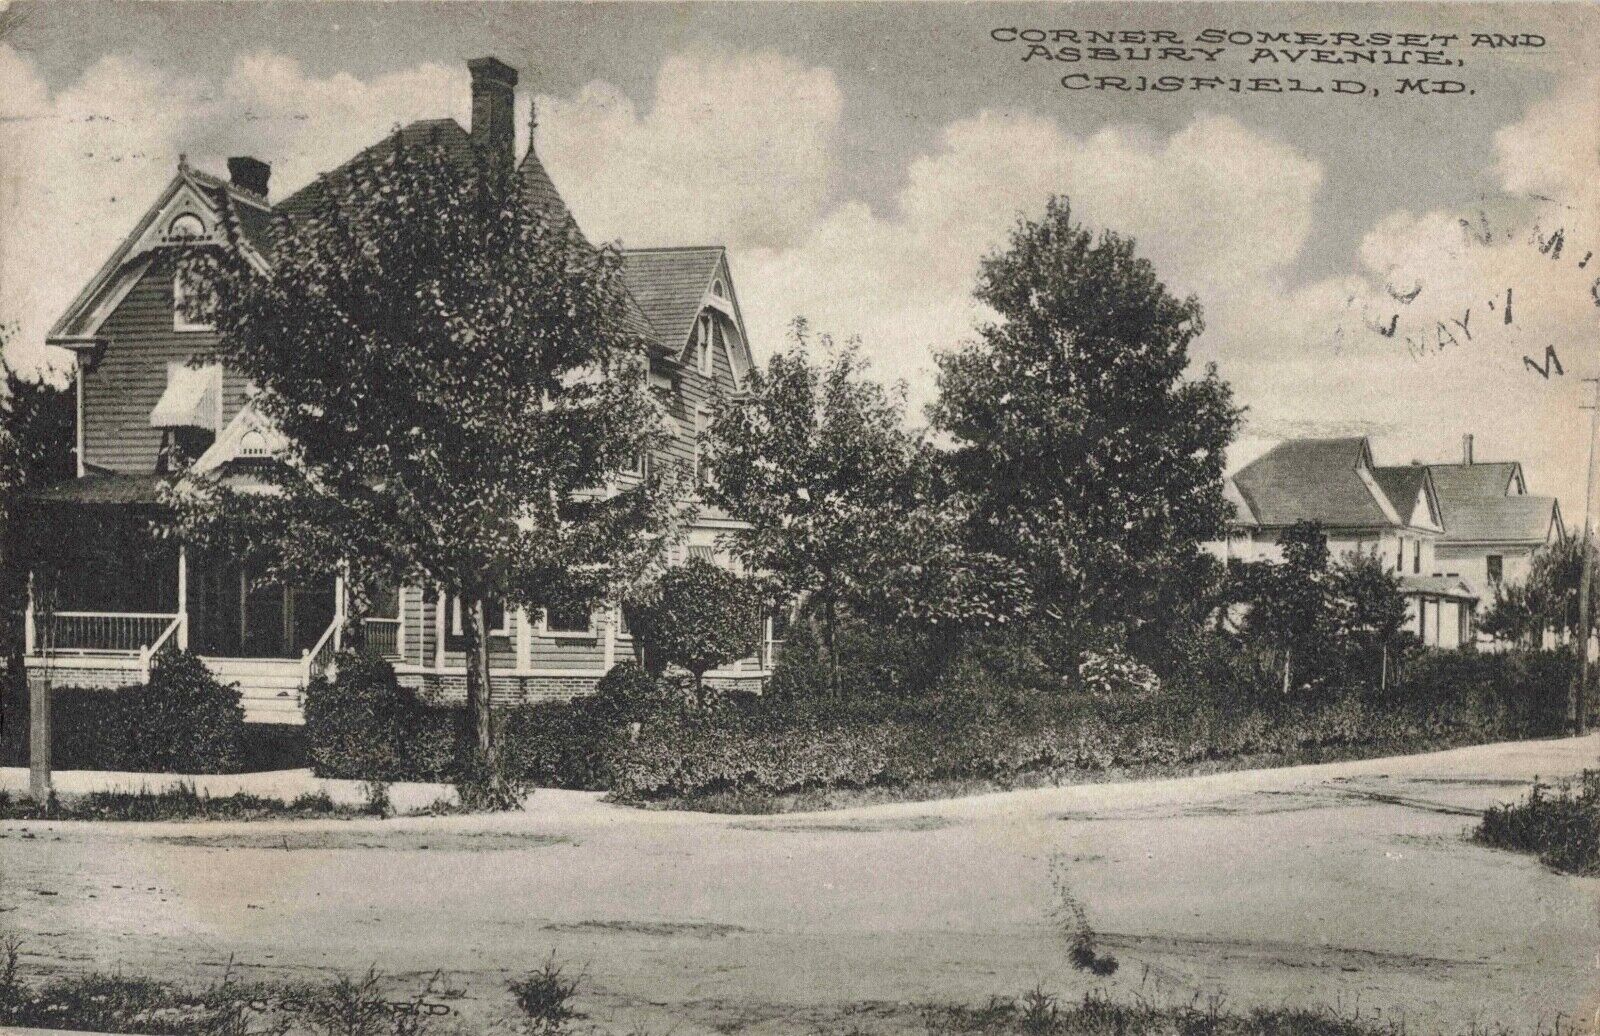 Corner Somerset & Asbury Avenue Crisfield Maryland MD 1913 Postcard